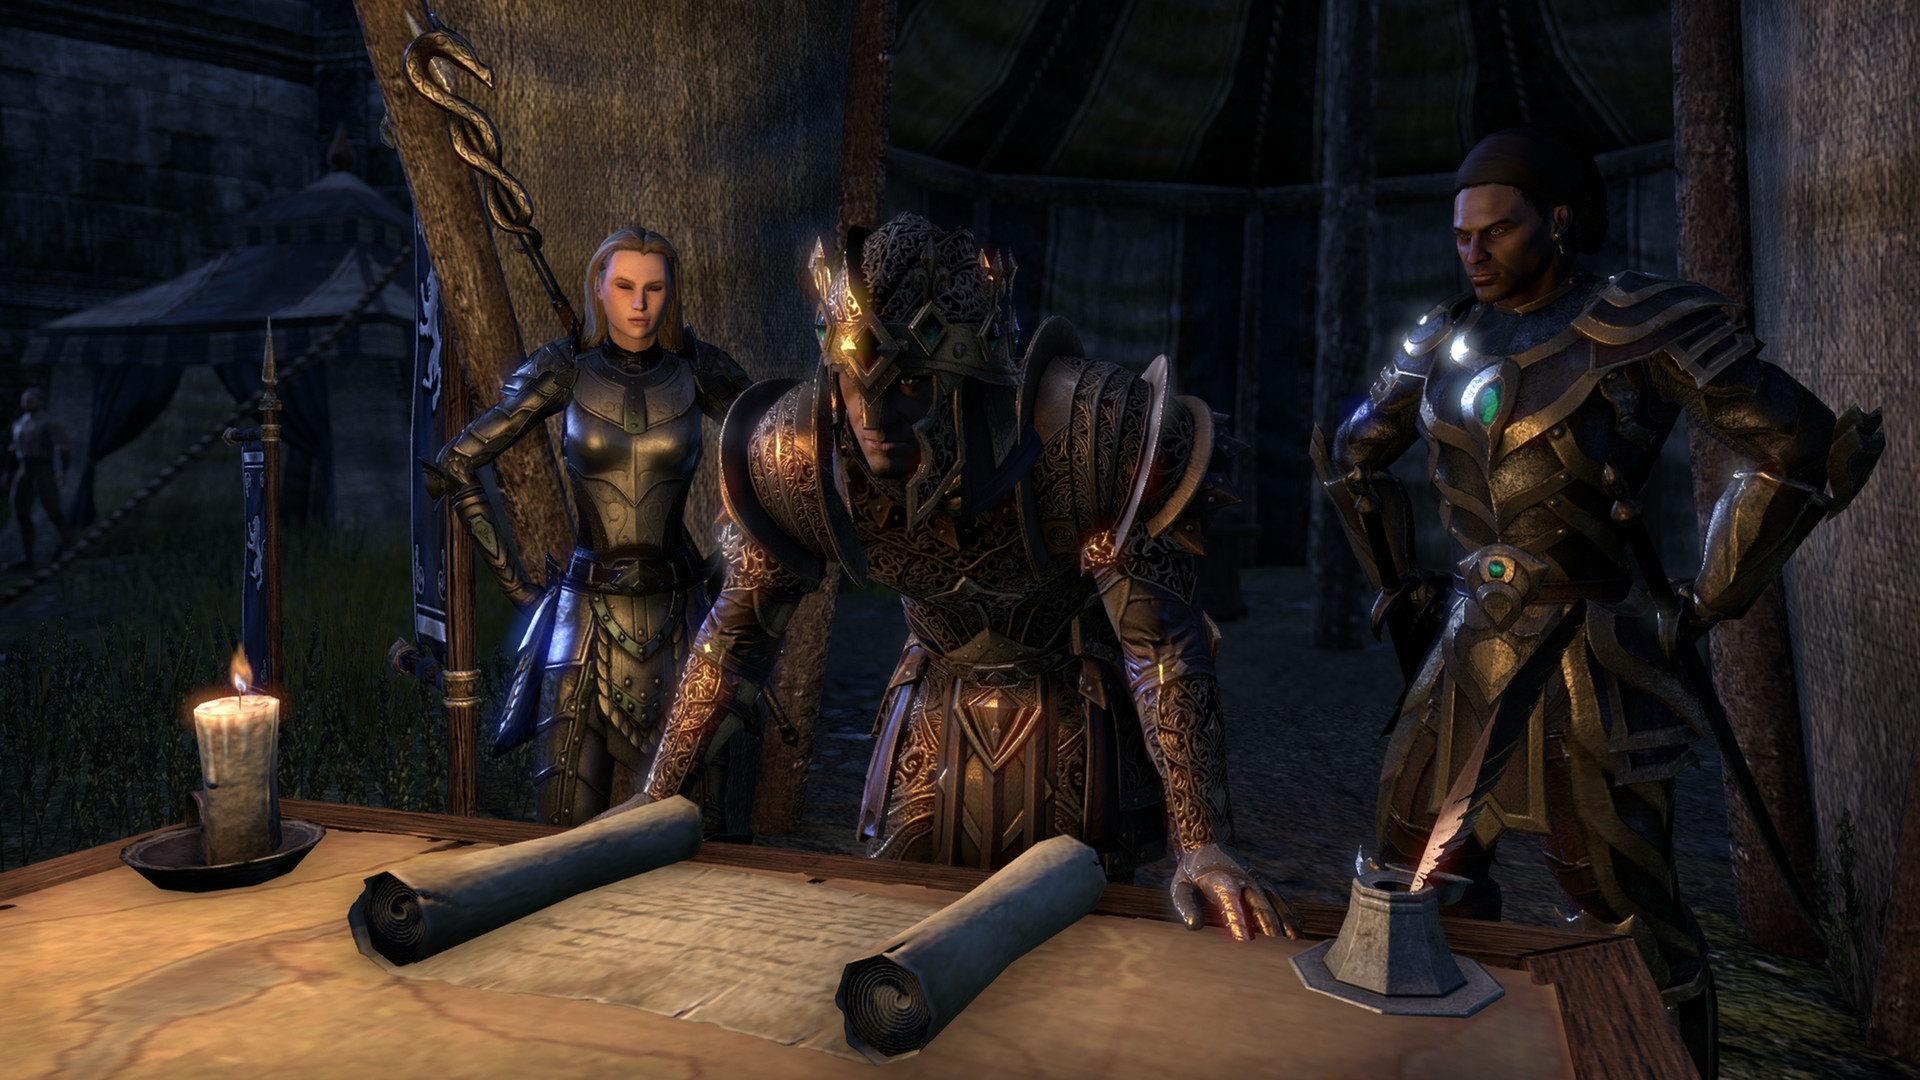 Elder Scrolls 6 multiplayer evidence appears online